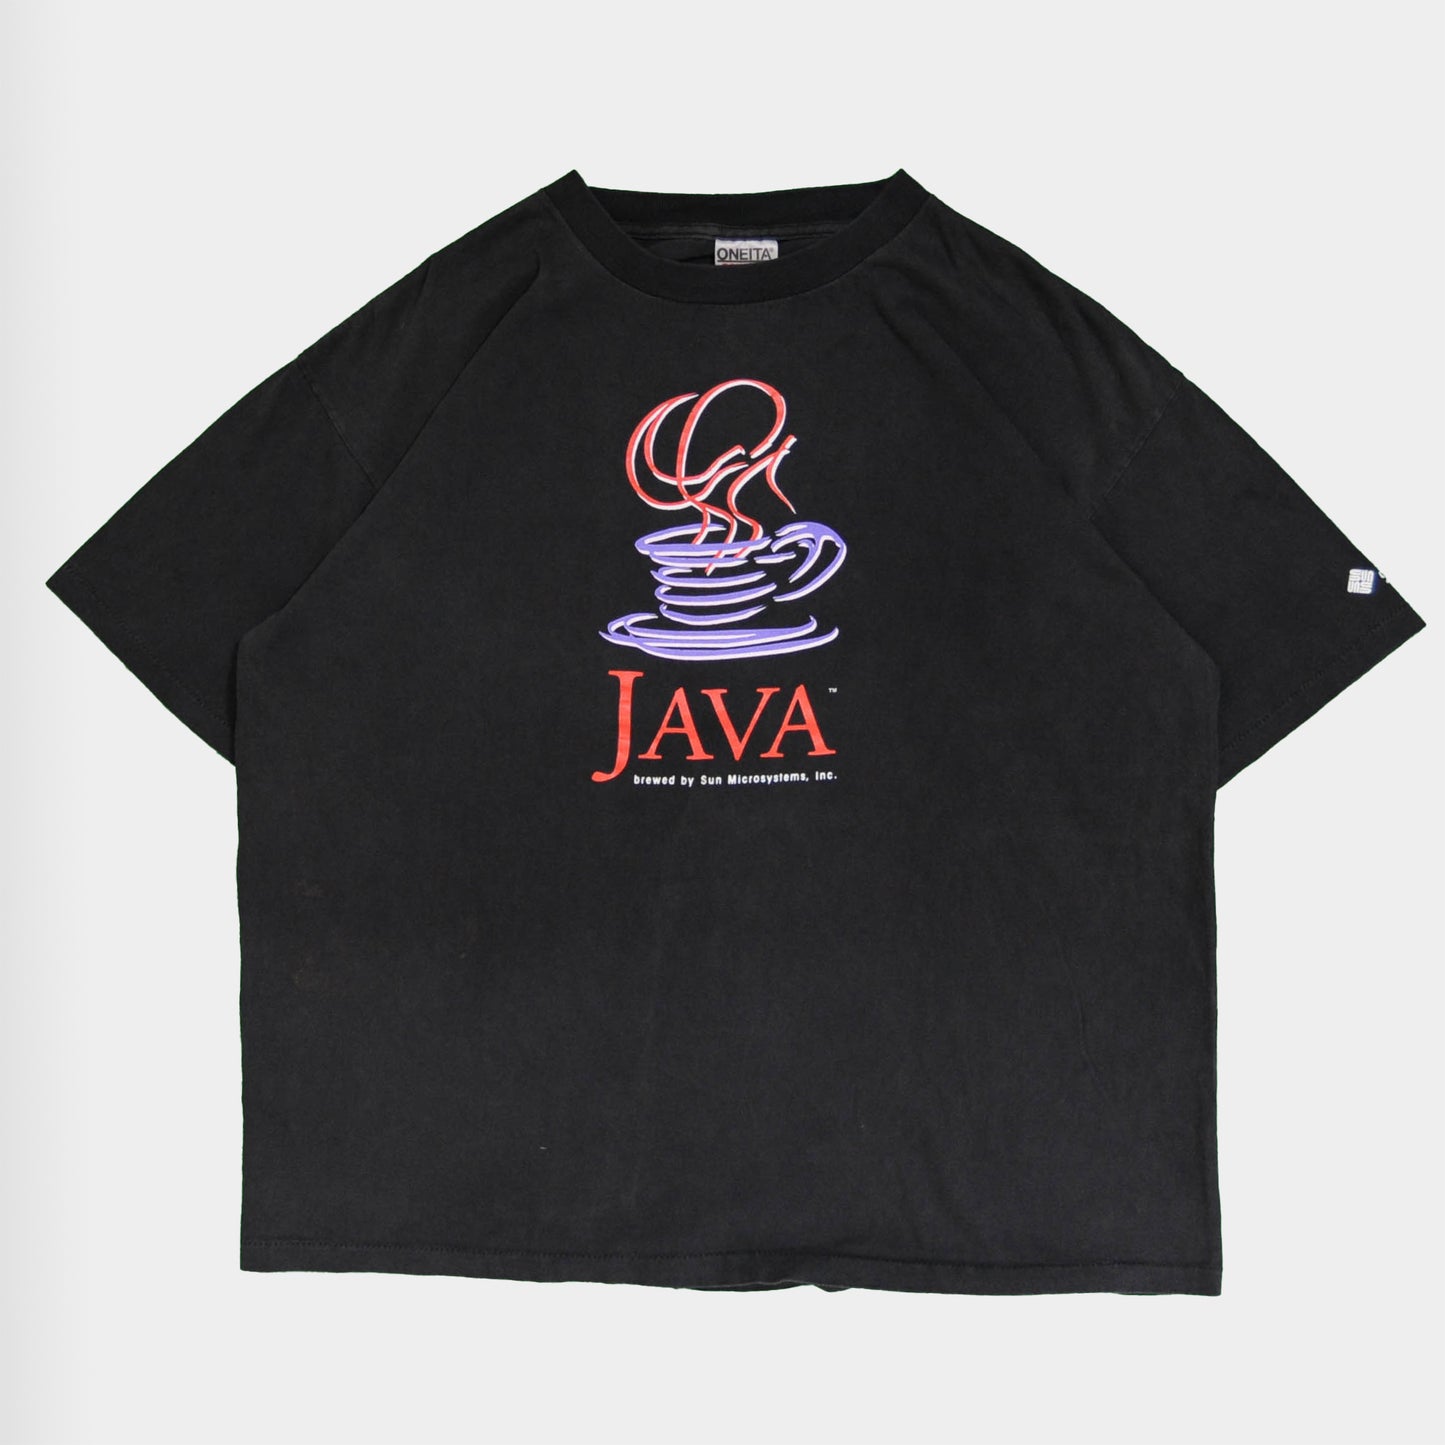 90's JAVA Sun micro systems Tシャツ 黒(XL)/A3577T-SO